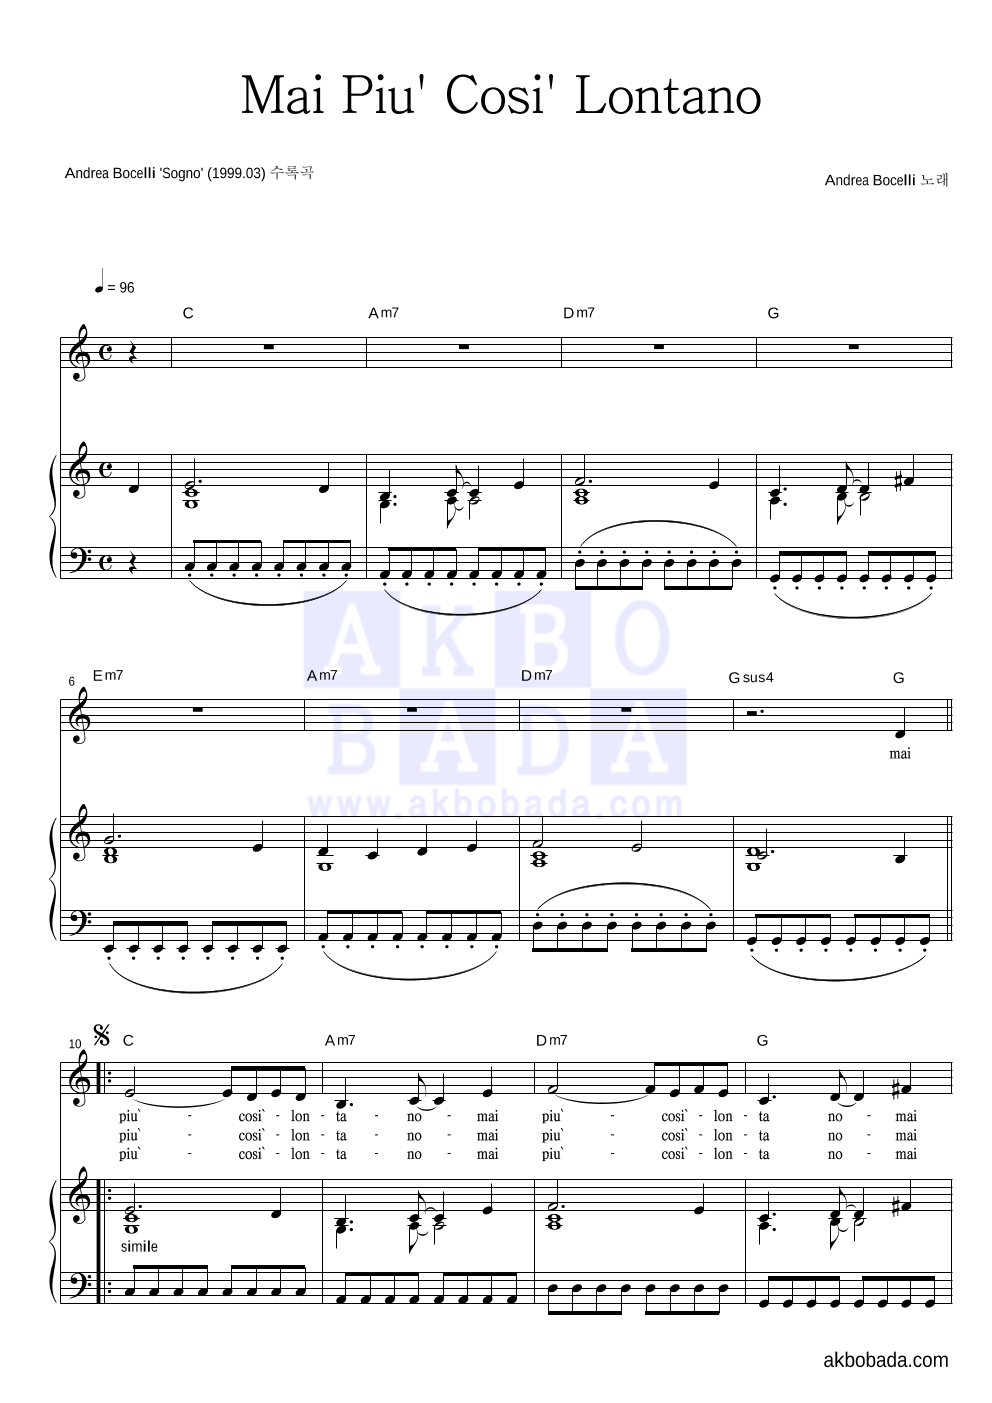 Andrea Bocelli - Mai Piu' Cosi' Lontano 피아노 3단 악보 